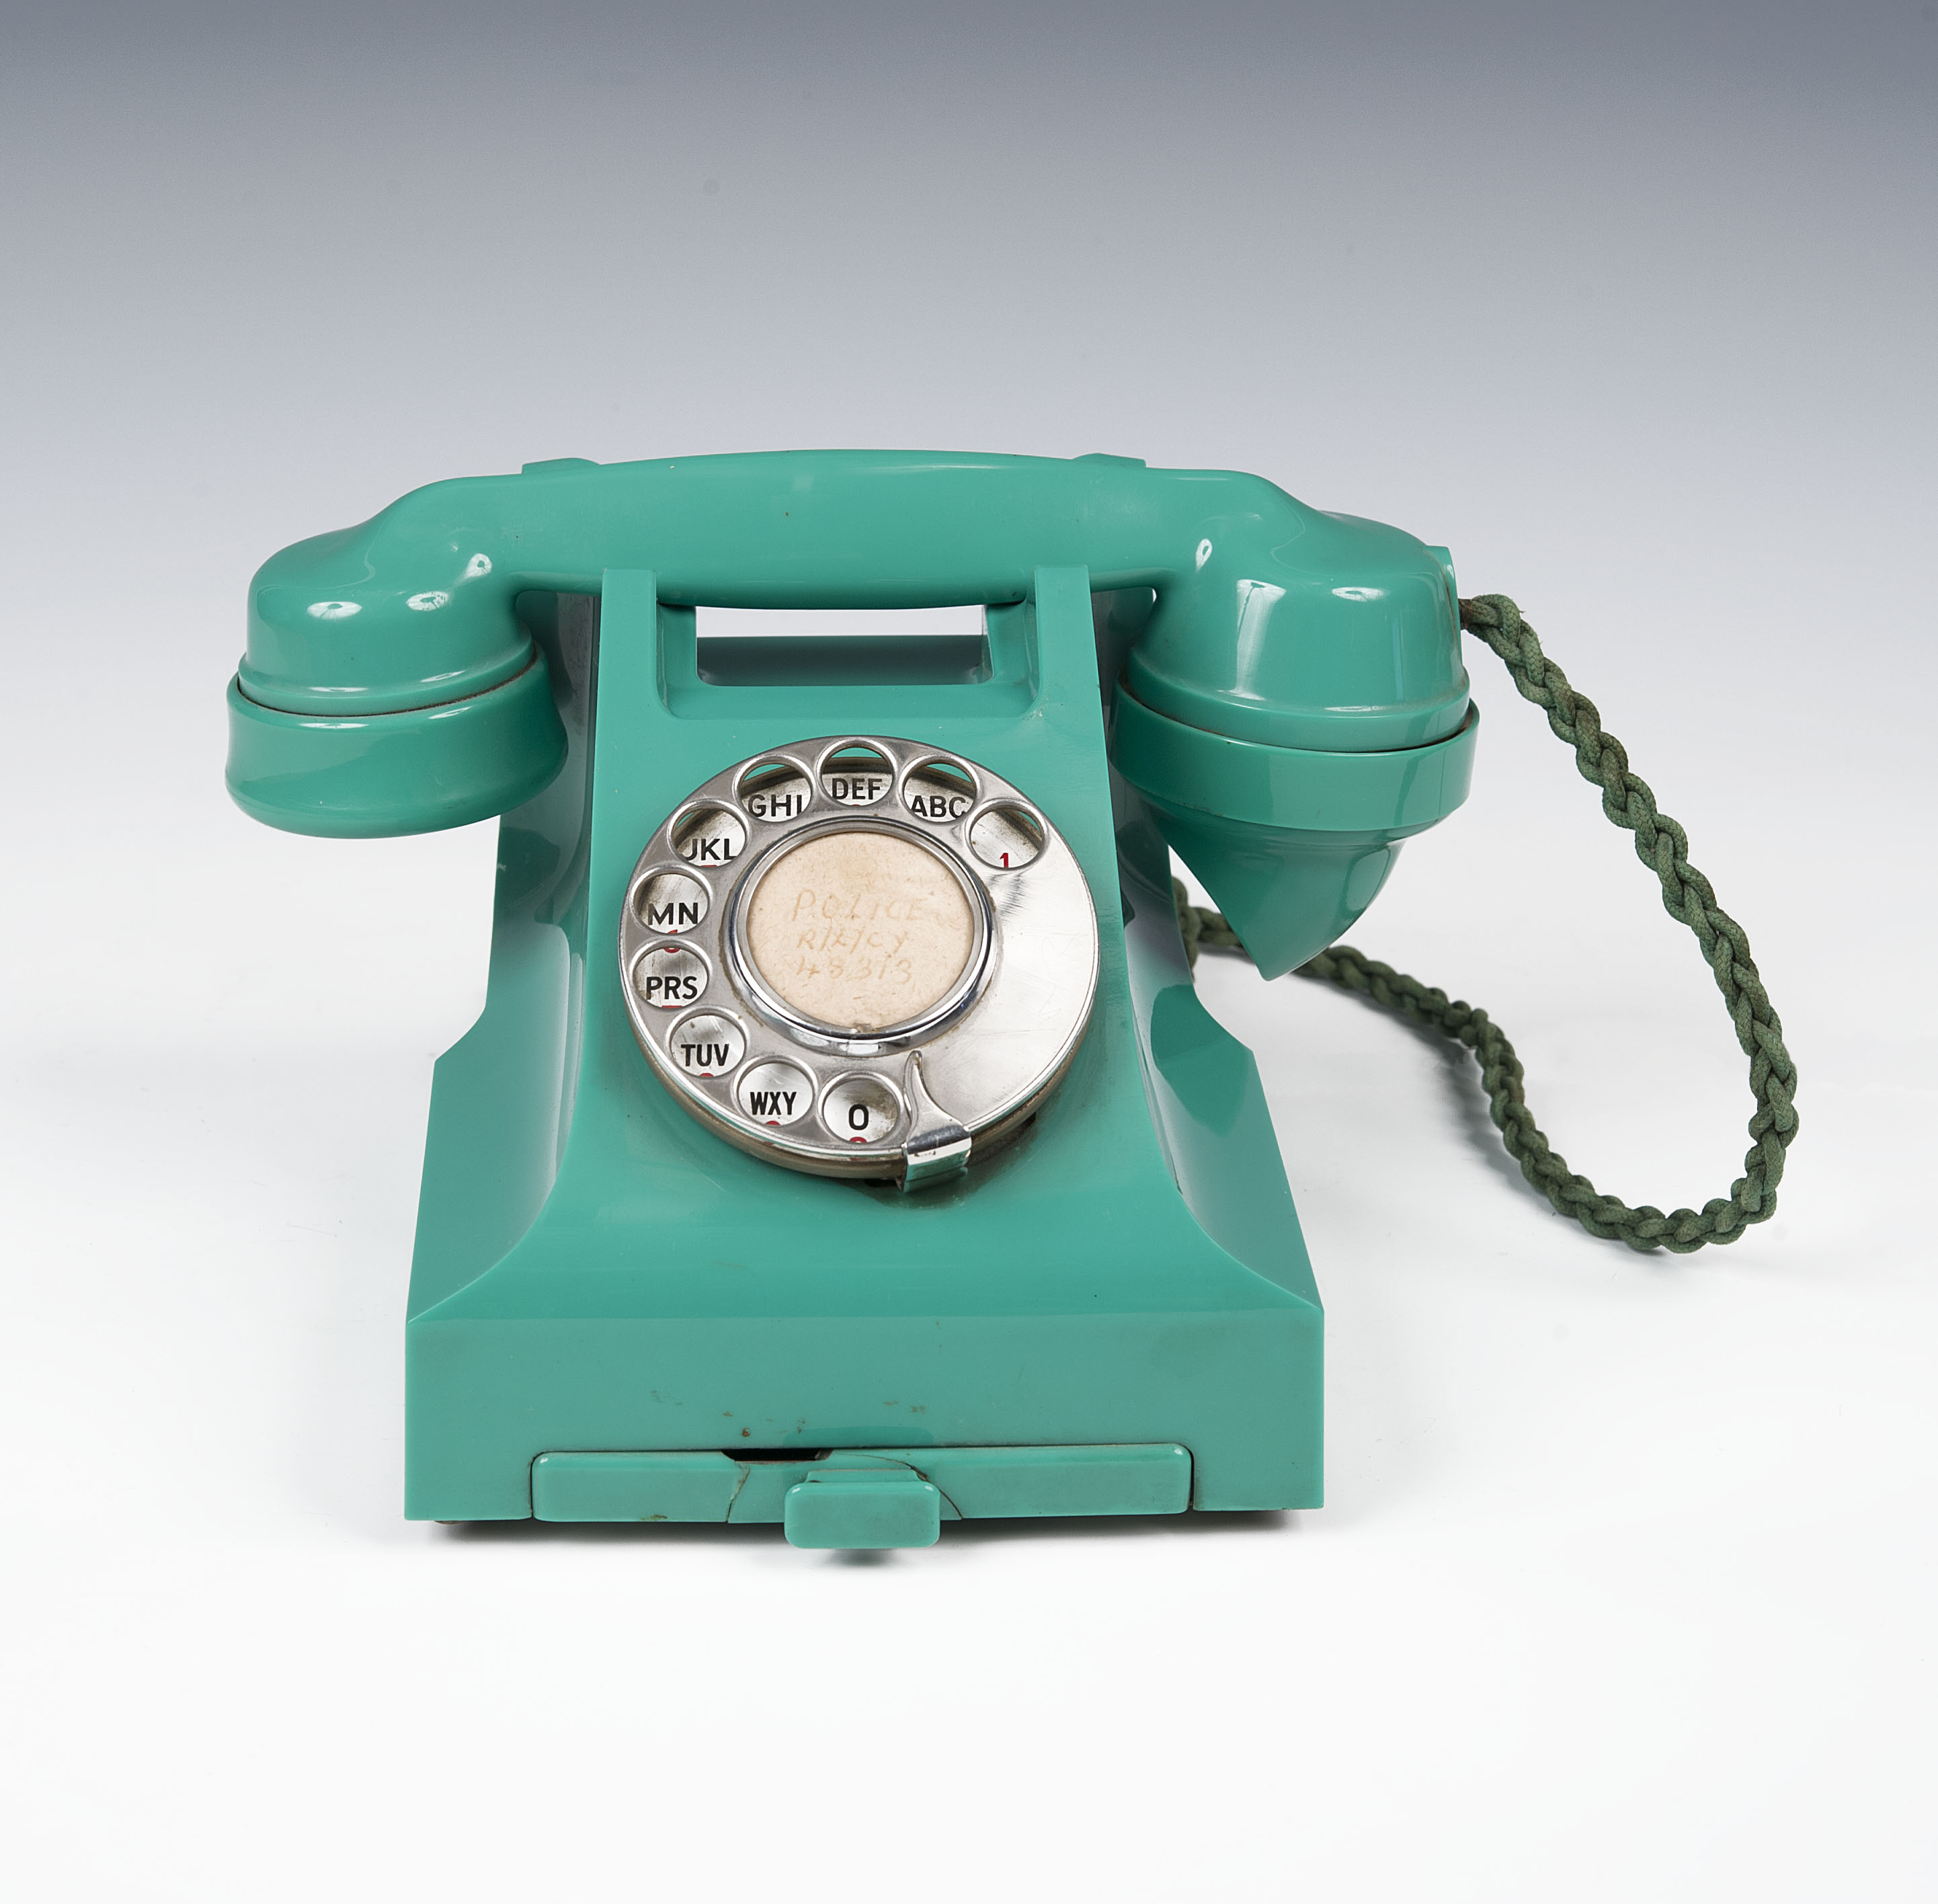 Old telephone made of bakelite 